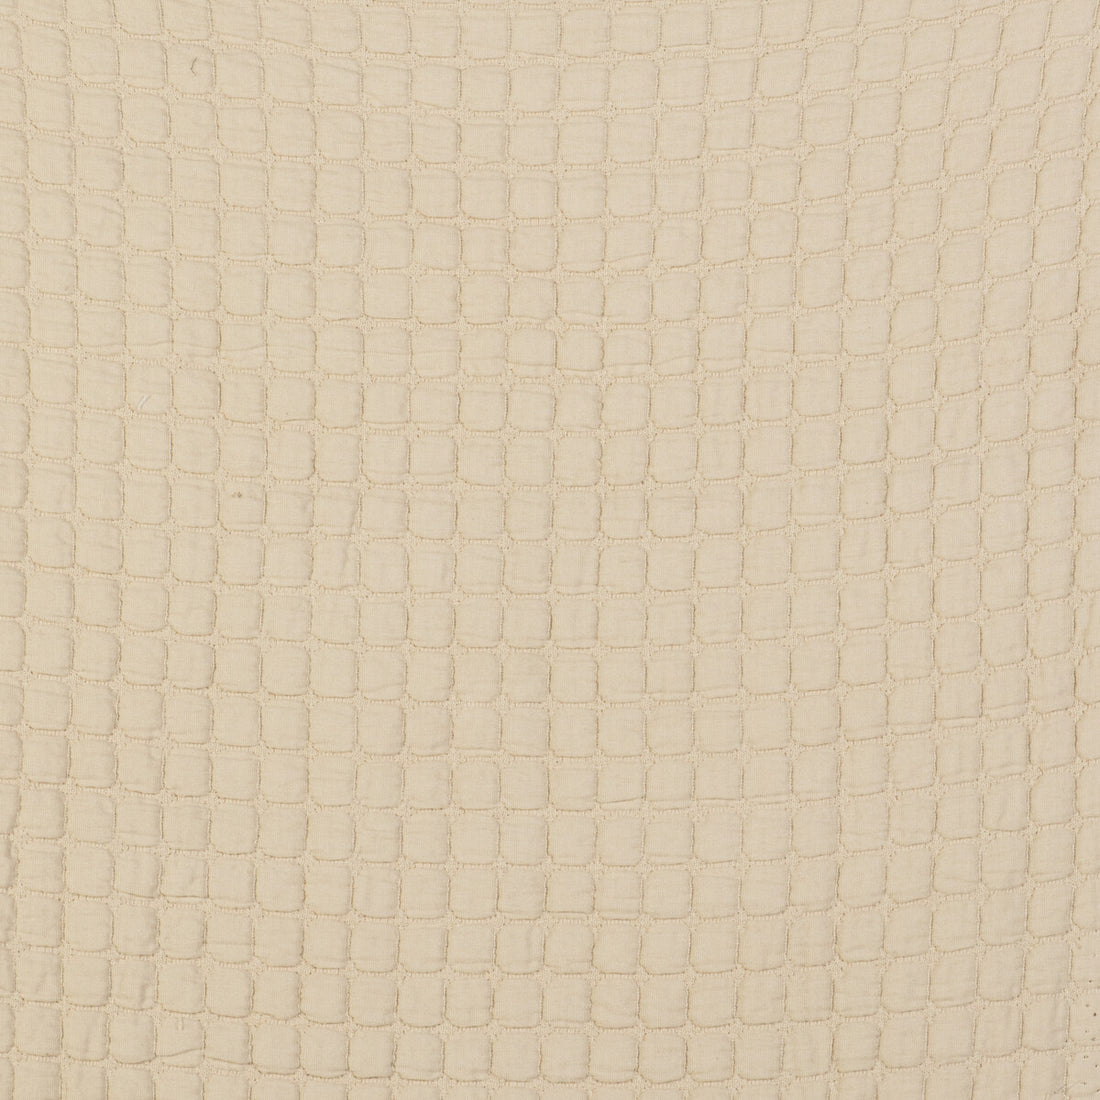 Morera fabric in crudo color - pattern GDT5523.002.0 - by Gaston y Daniela in the Gaston Libreria collection